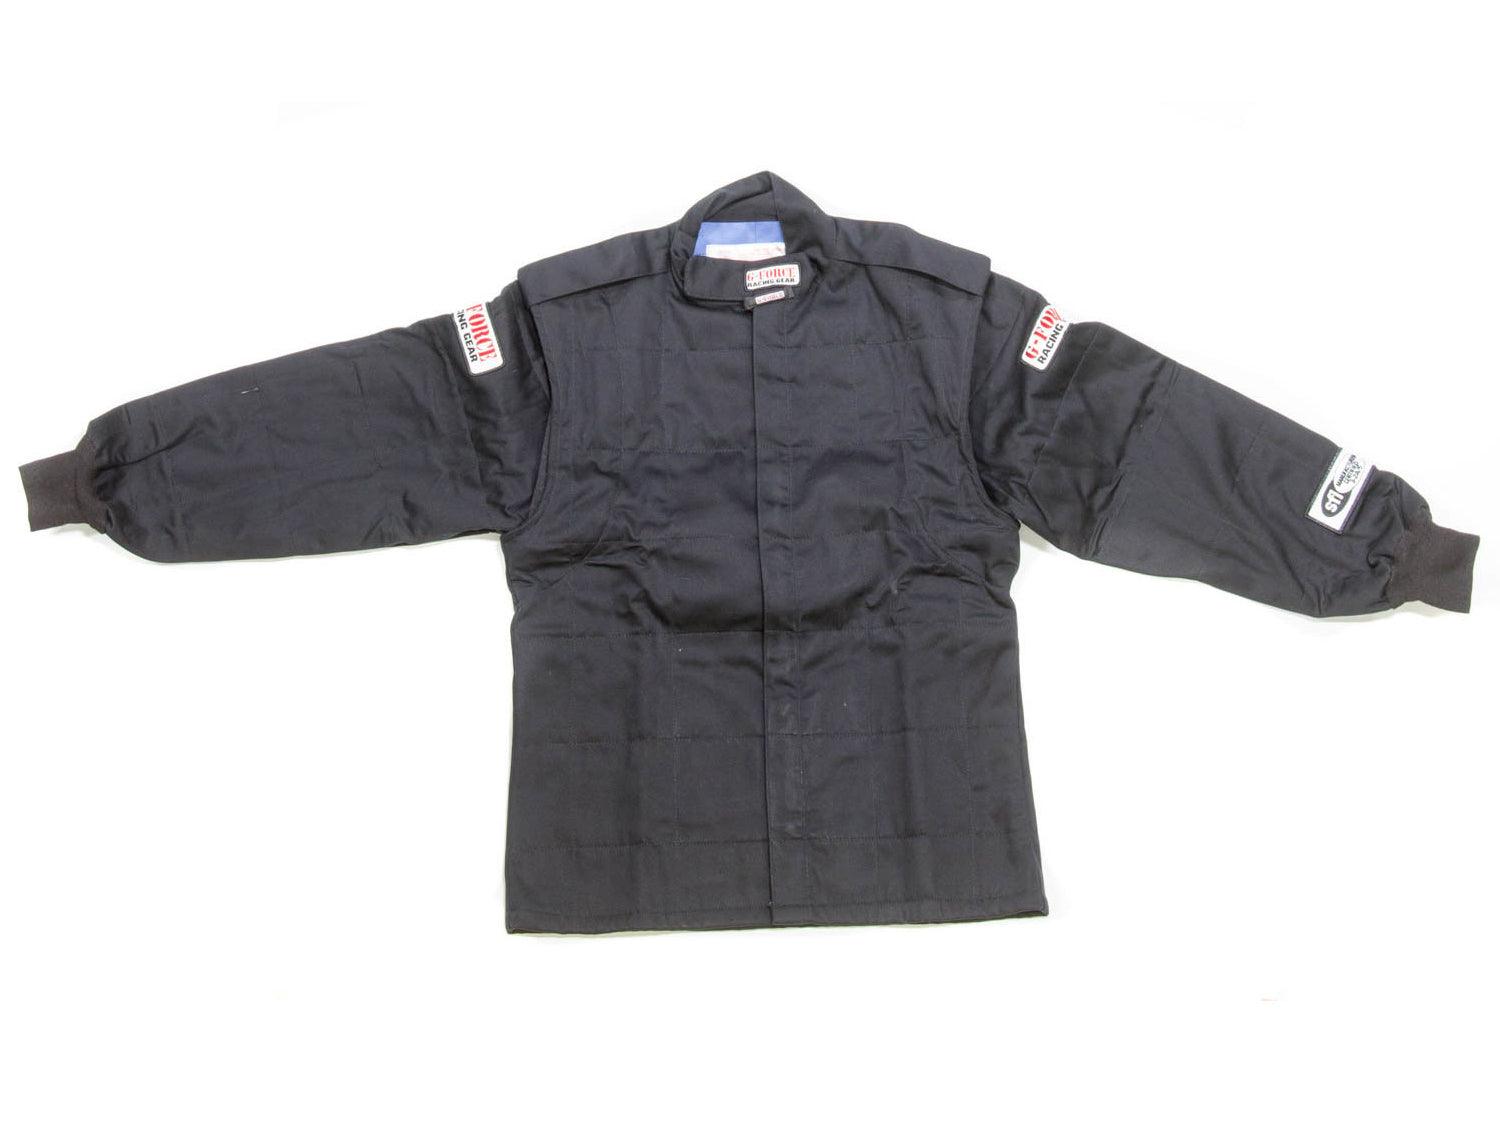 GF525 Jacket Large Black - Burlile Performance Products